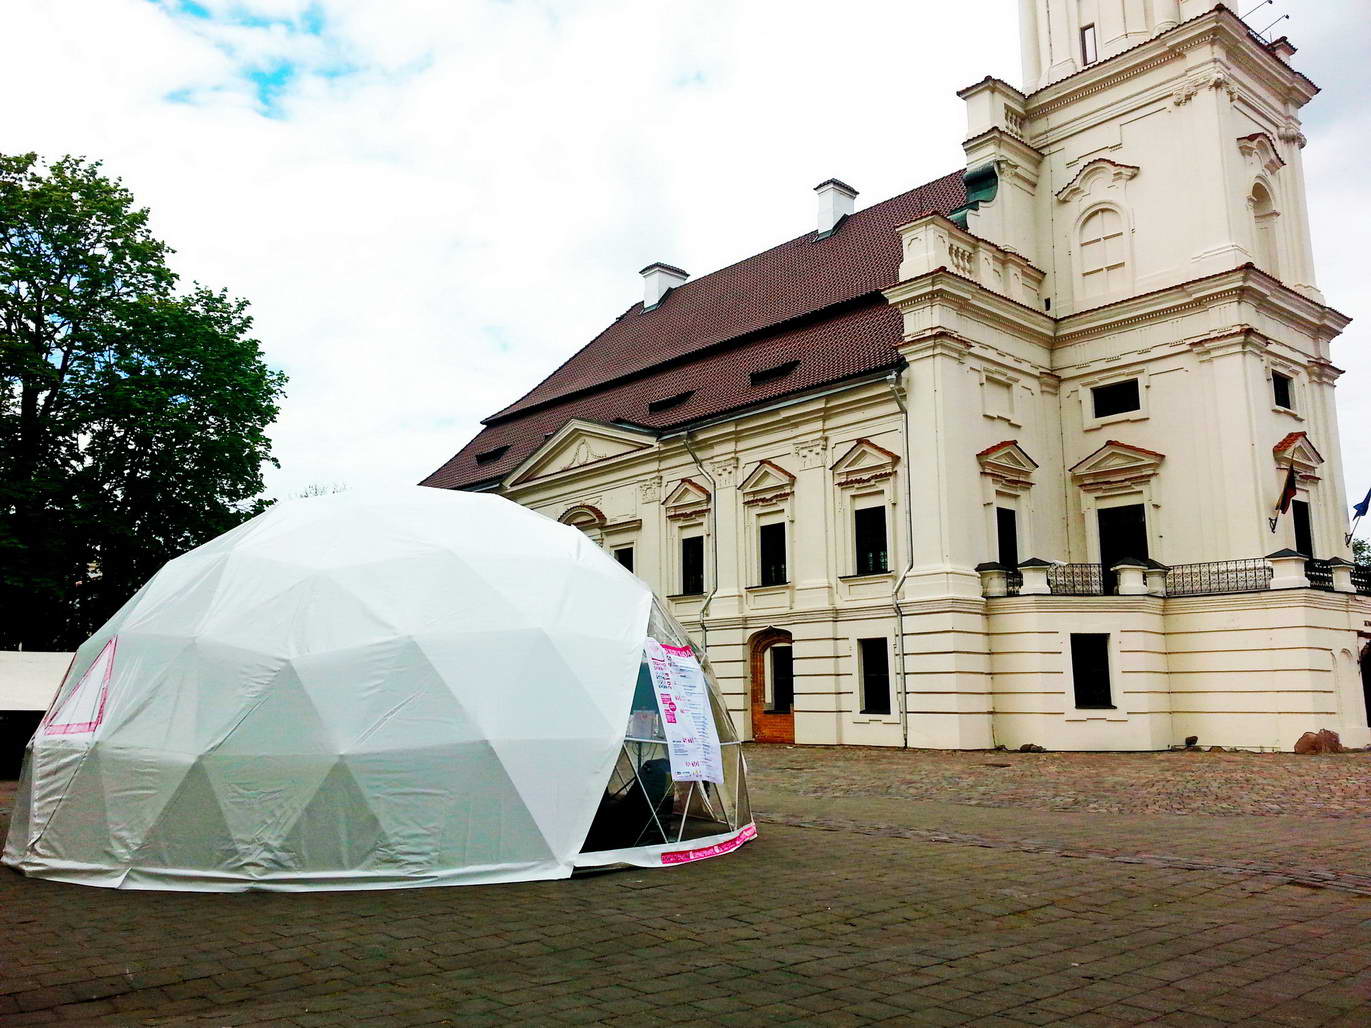 Portable Dome Ø8m for Design Week 2014 Kaunas, Lithuania